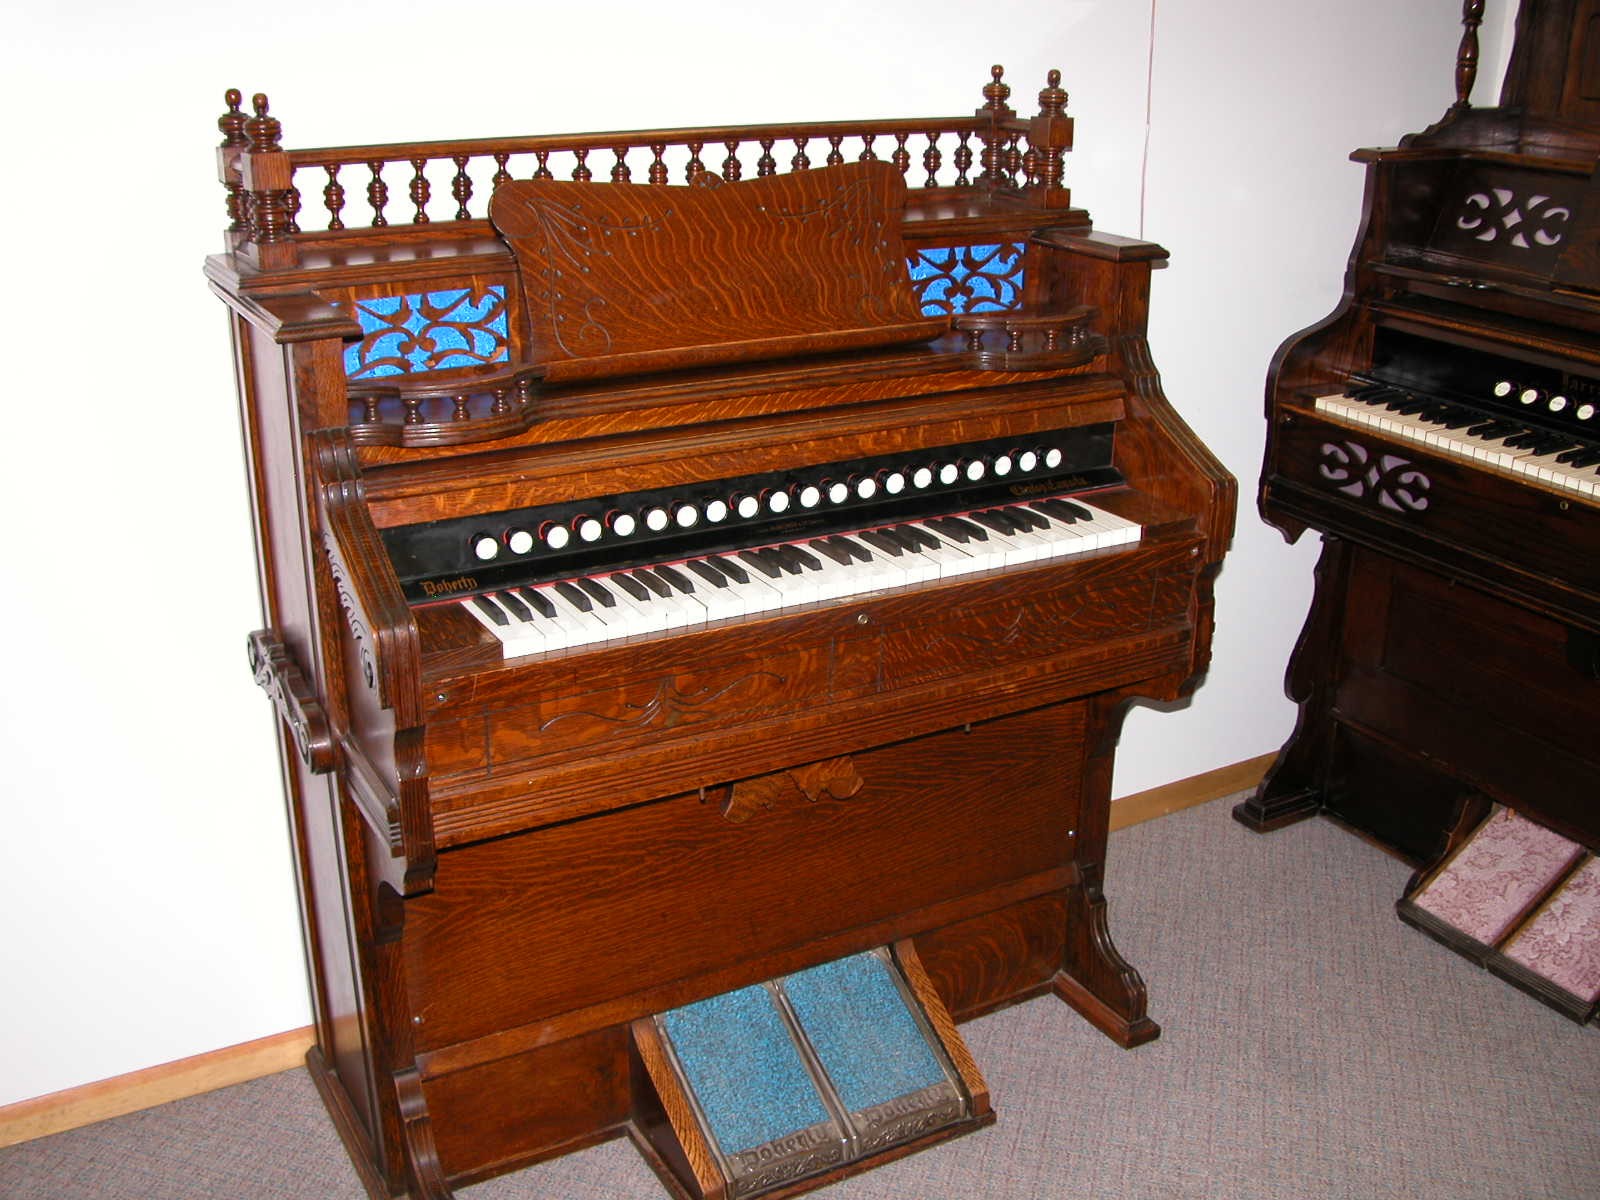 1885 Doherty & Ohewtzeman Organ Co. I. D. No. #21